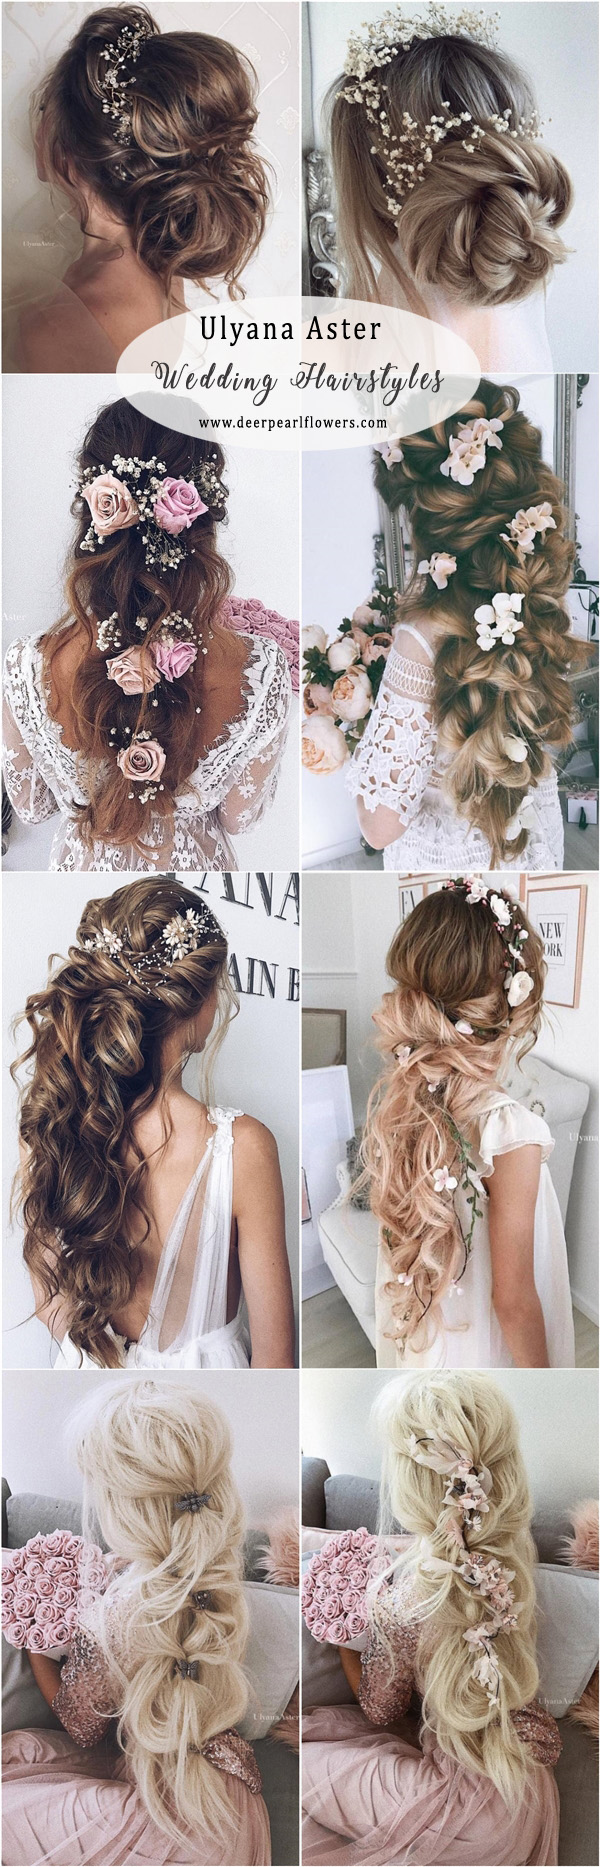 Ulyana Aster Long Wedding Hairstyles